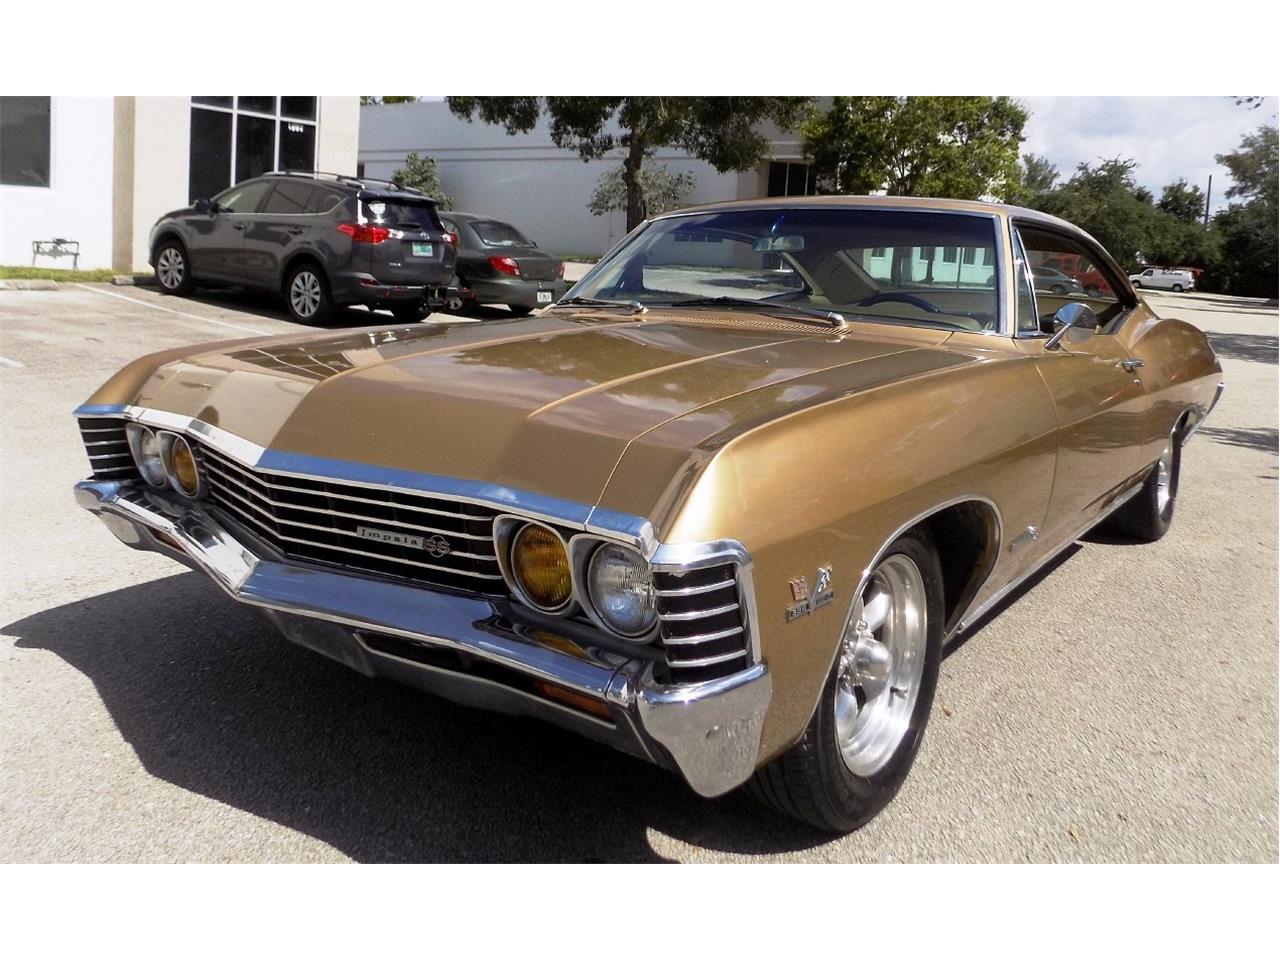 For Sale: 1967 Chevrolet Impala SS in POMPANO BEACH, Florida.